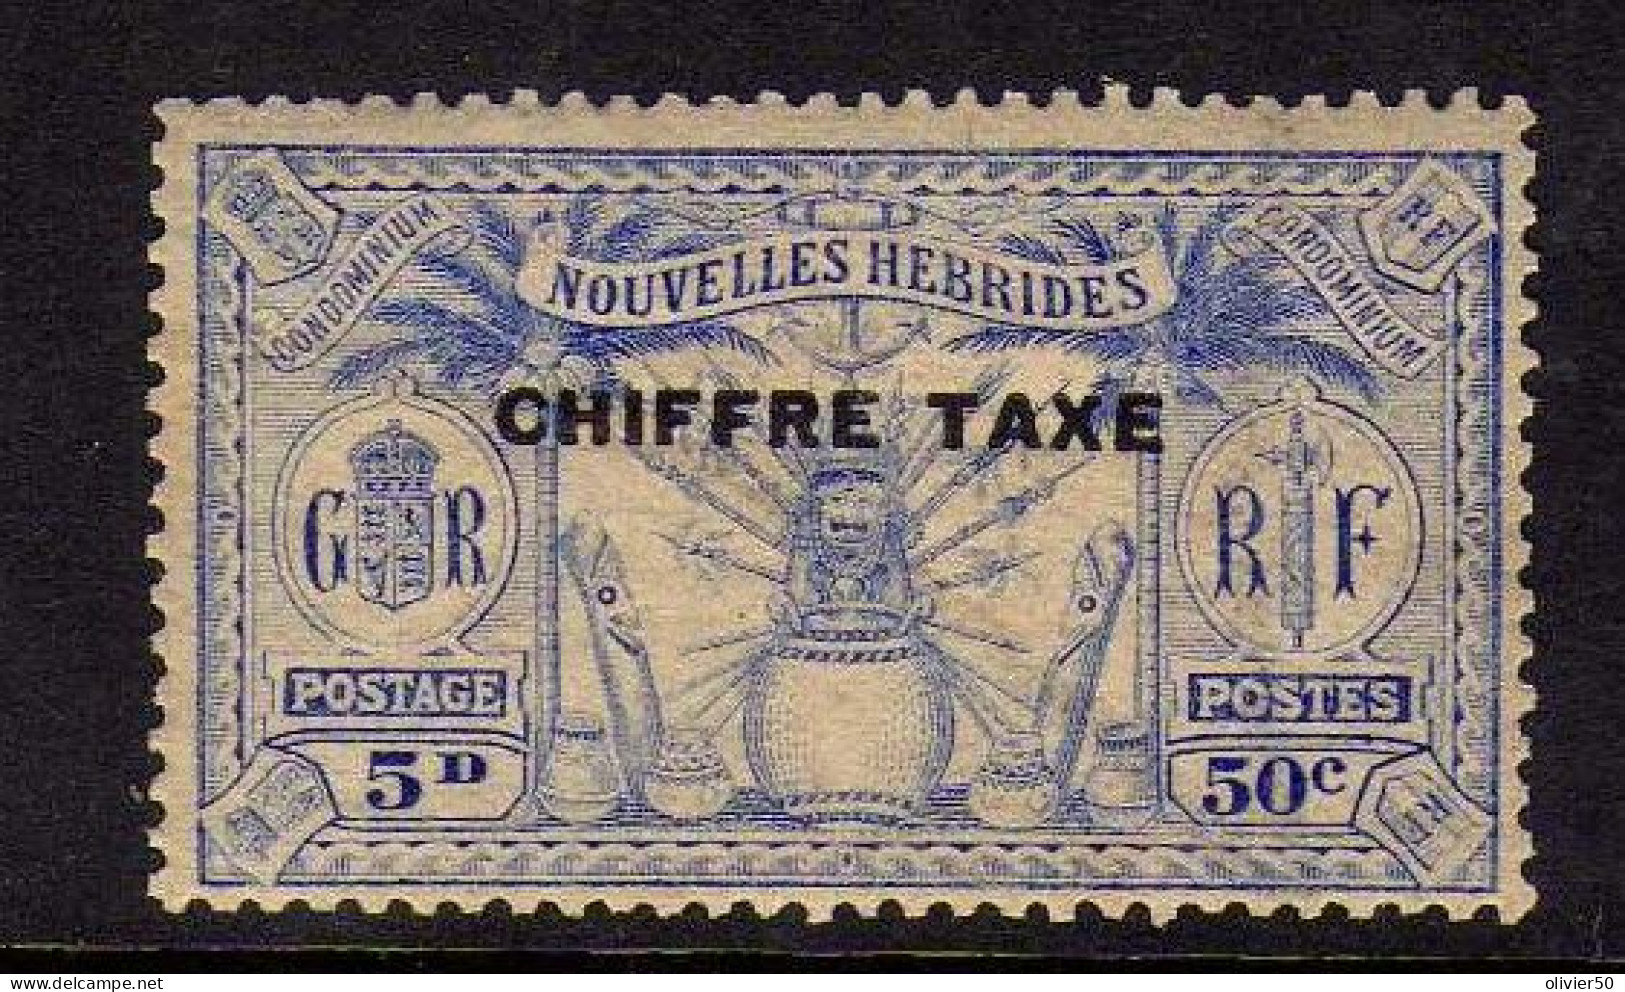 Nouvelles-Hebrides (1923) -  Timbre-Taxe  5 P. 50 C.   Neuf** - MNH - Segnatasse